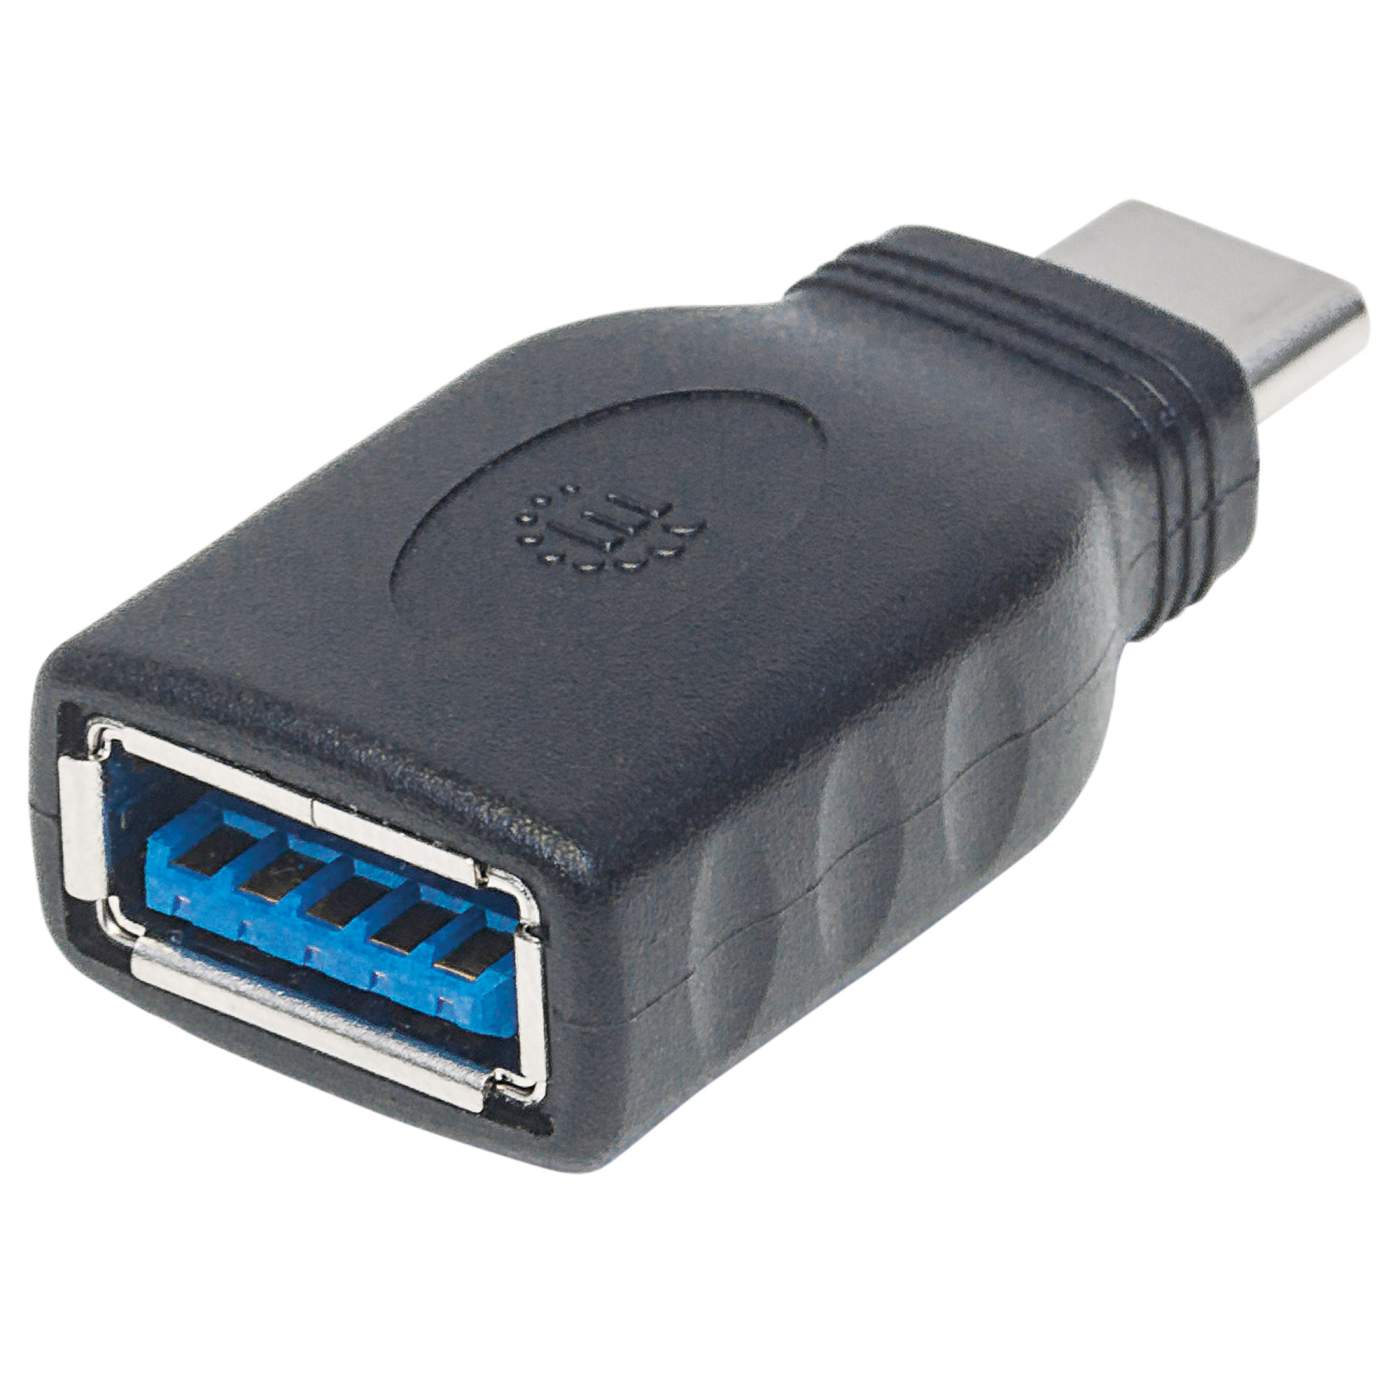 USB-C to USB Adapter Converter USB-A - USB-C Cables